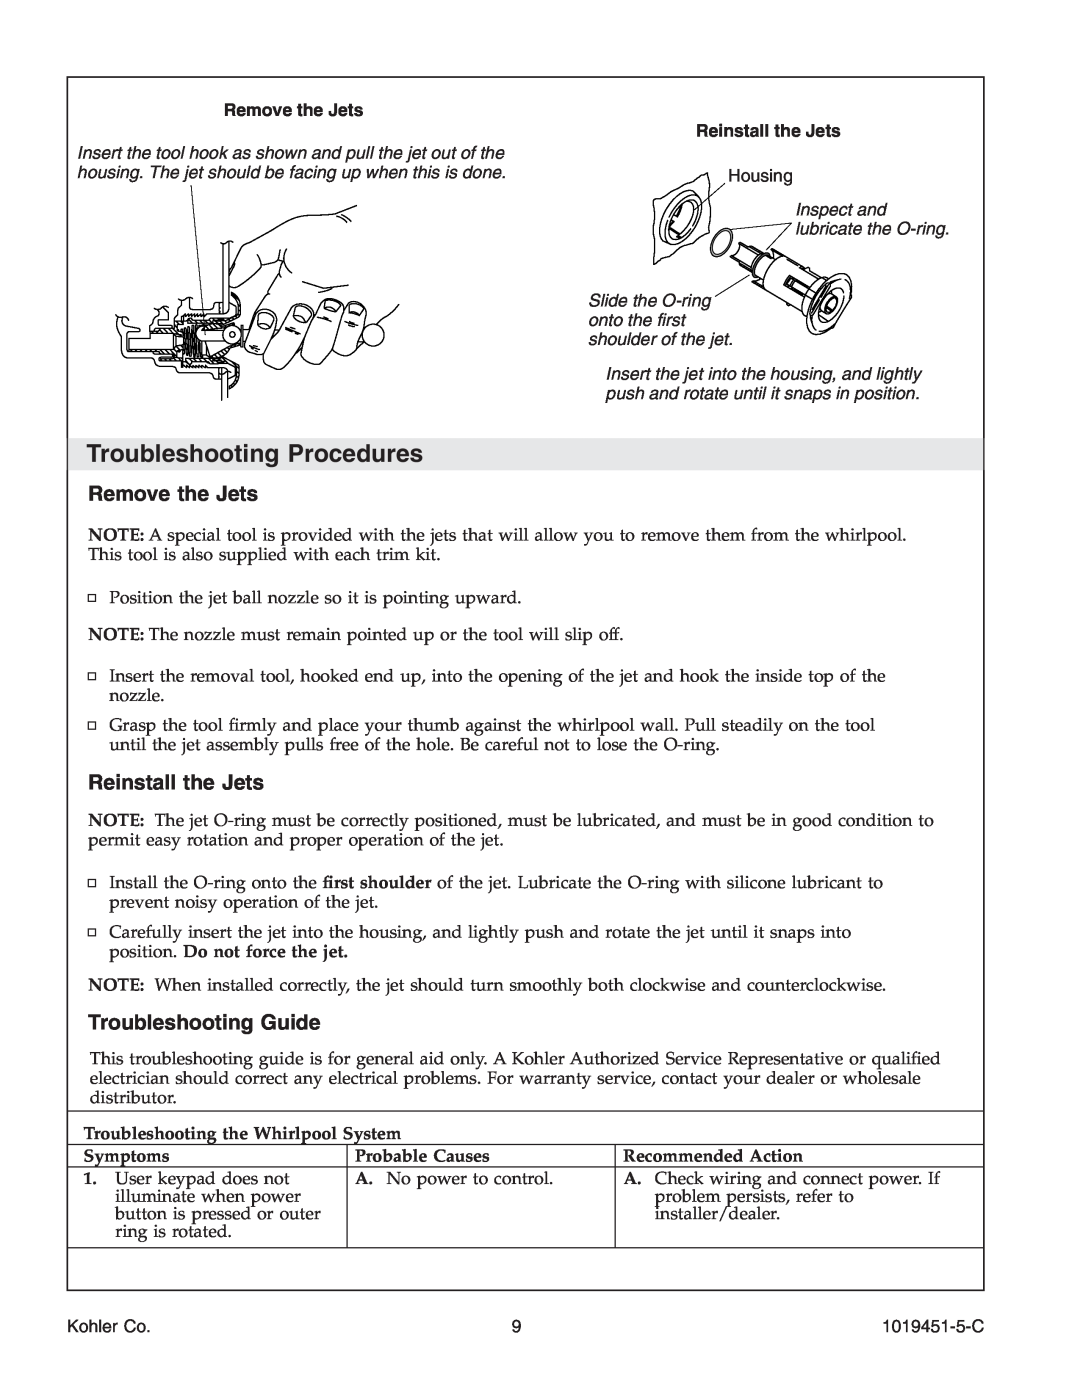 Kohler K-865 manual Troubleshooting Procedures, Remove the Jets, Reinstall the Jets, Troubleshooting Guide 